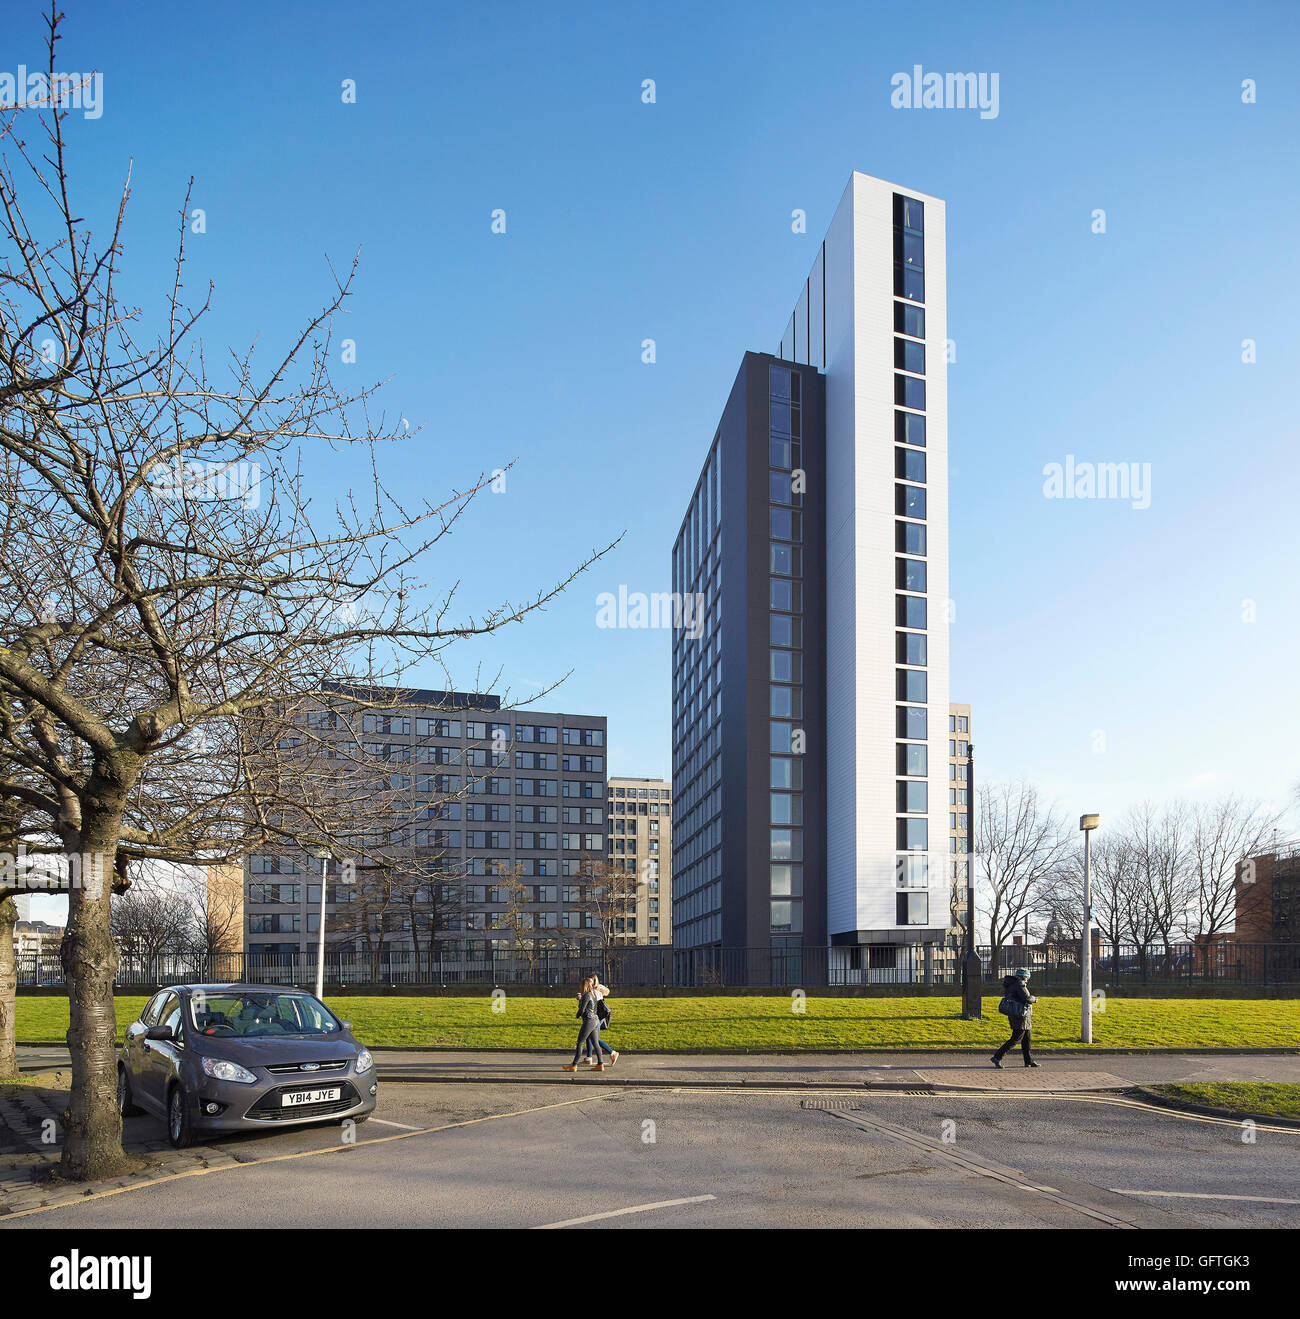 Student accommodation tower with university common. Leeds Central Village, Leeds, United Kingdom. Architect: John McAslan & Partners, 2015. Stock Photo